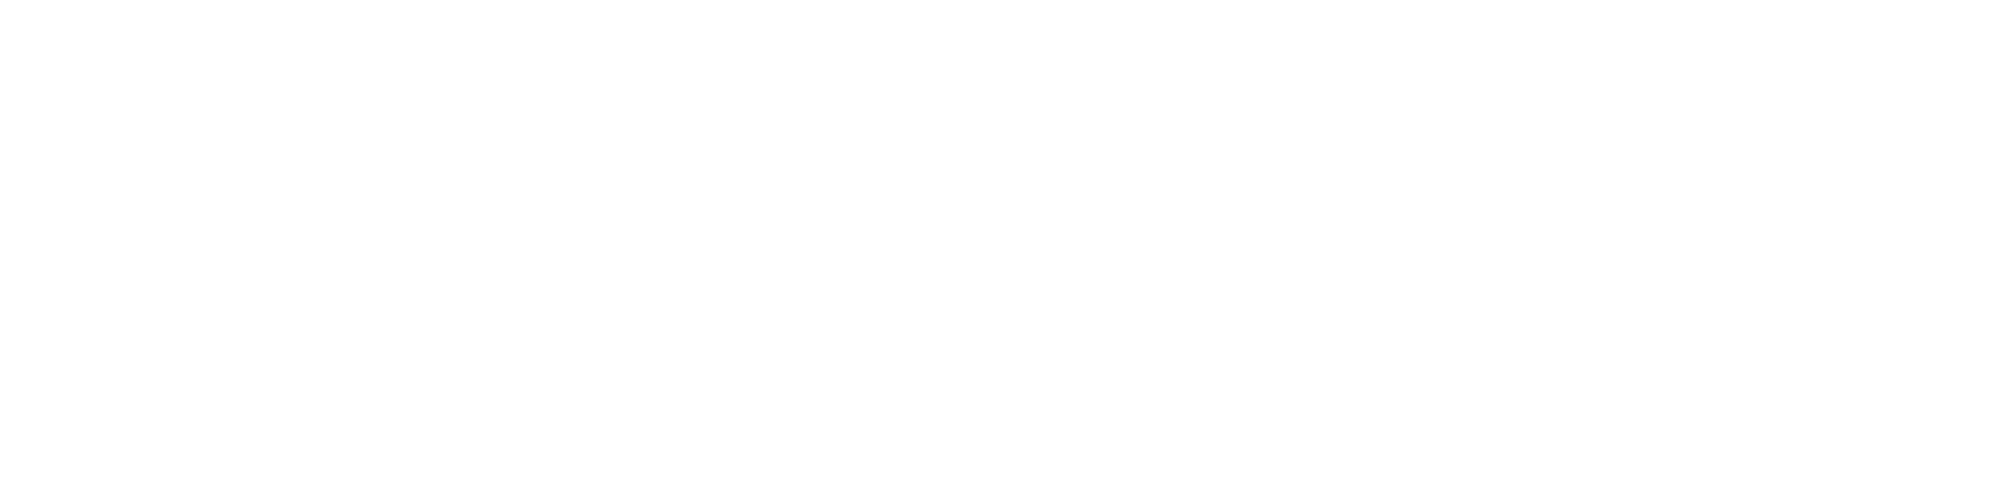 tote maritime logo